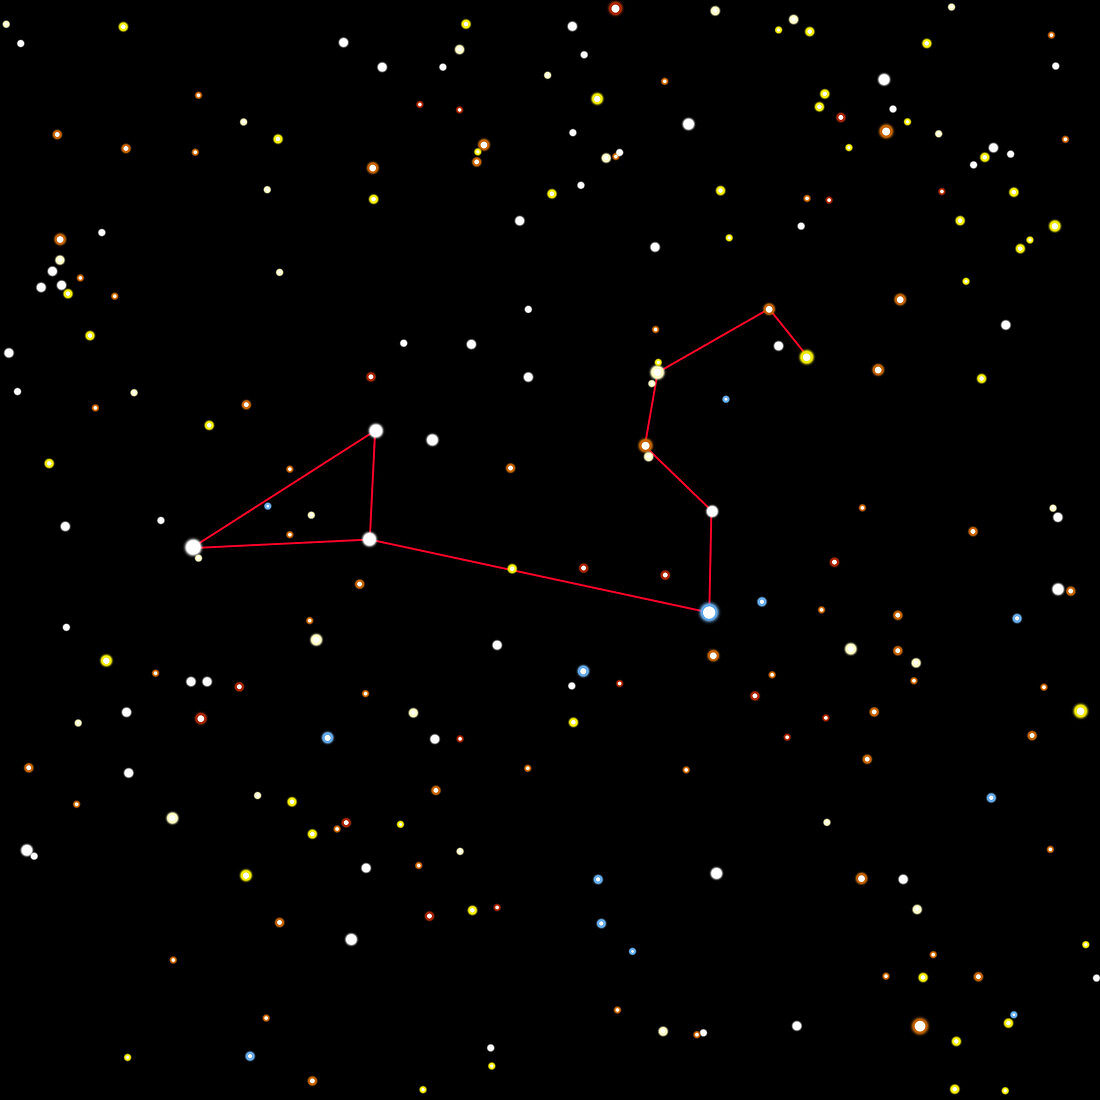 Artwork of the constellation of Leo